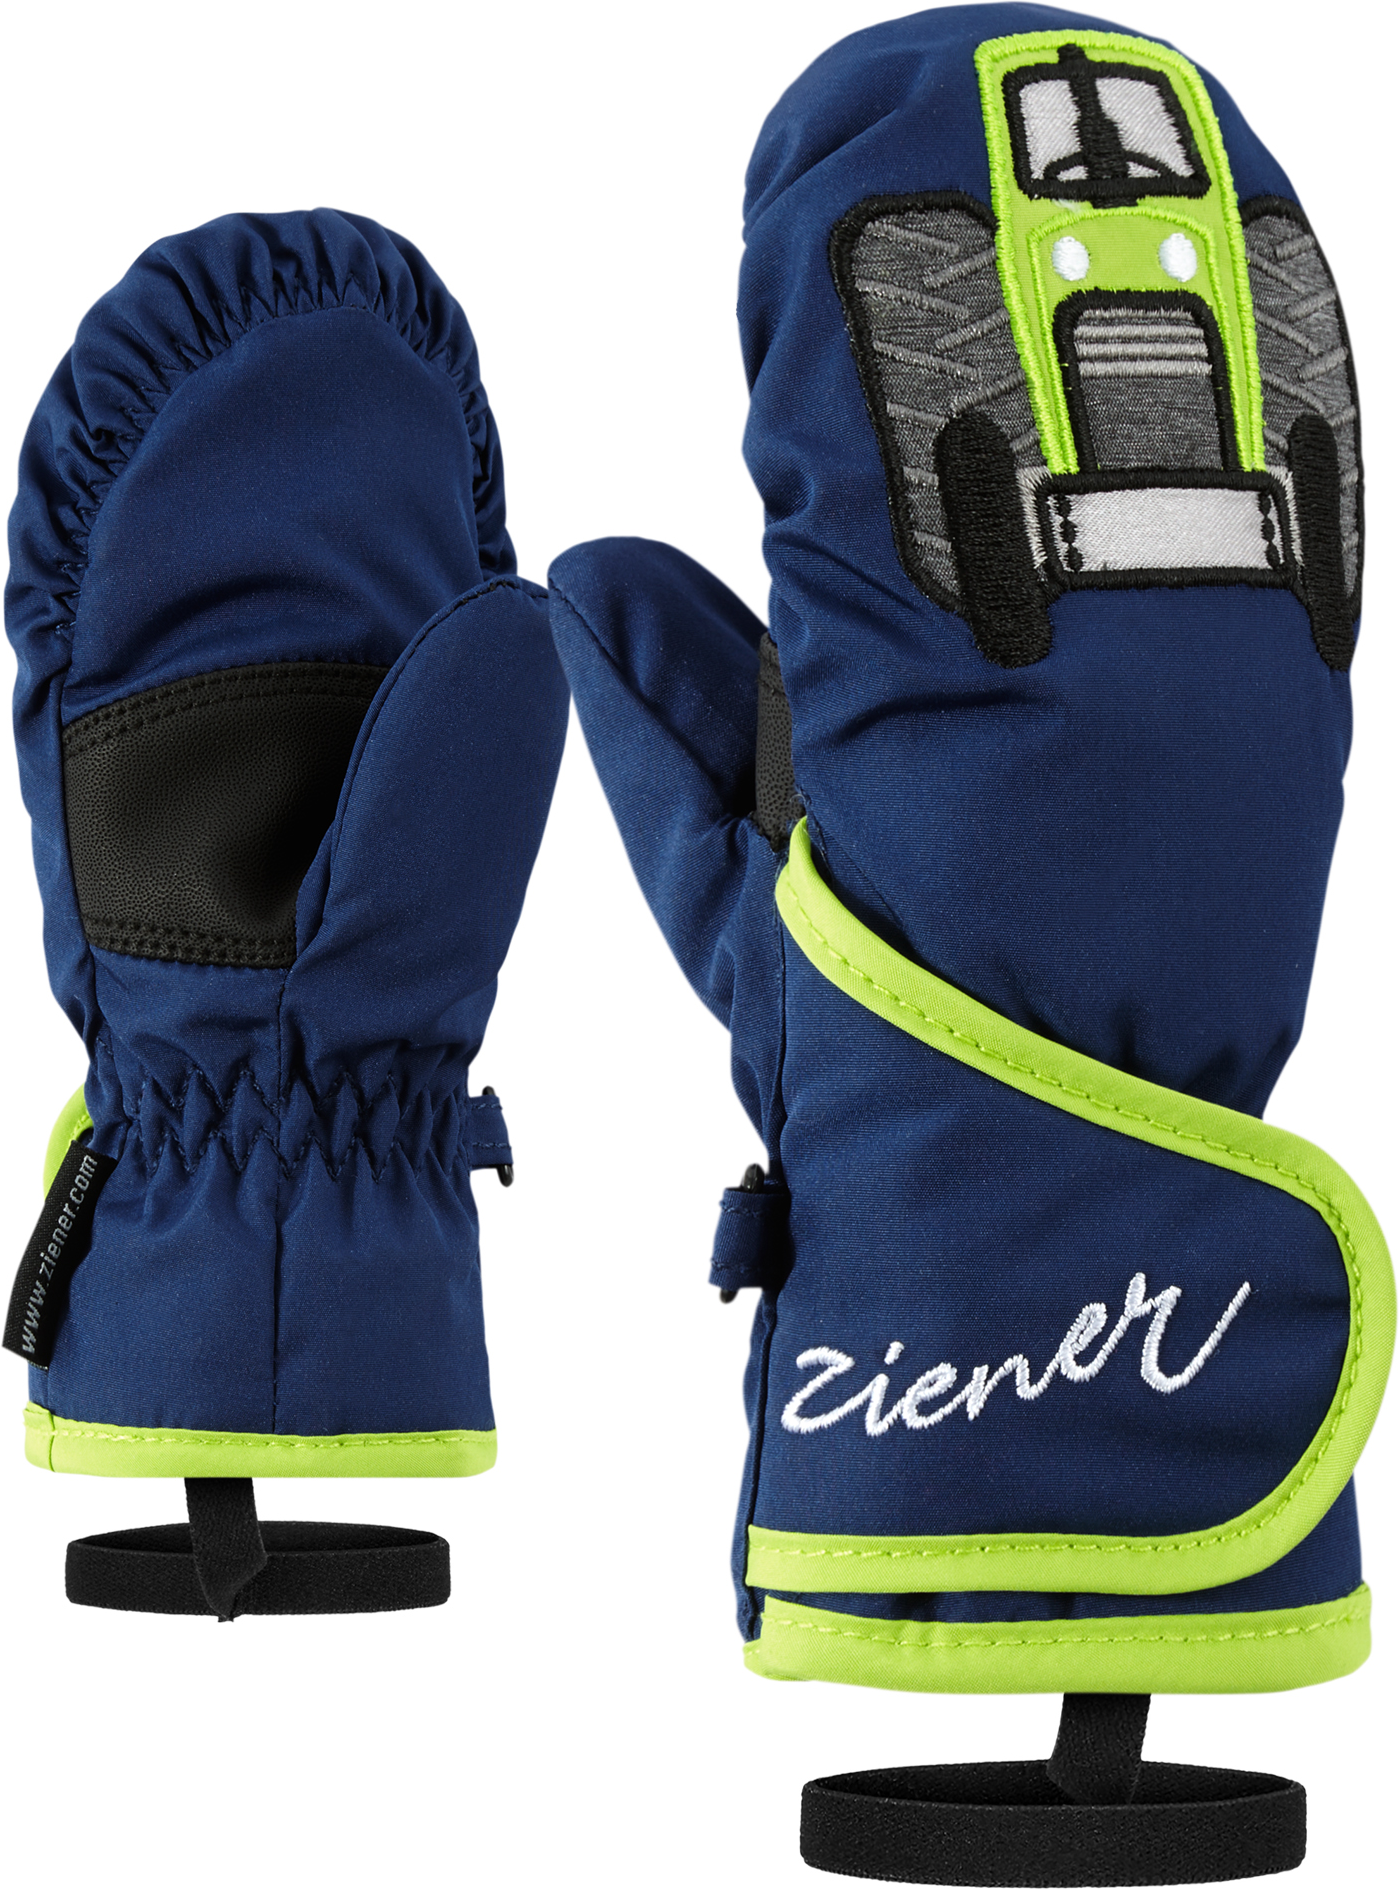 LAFAUNA AS(R) MINIS glove 855 116 | Intersport Wolf